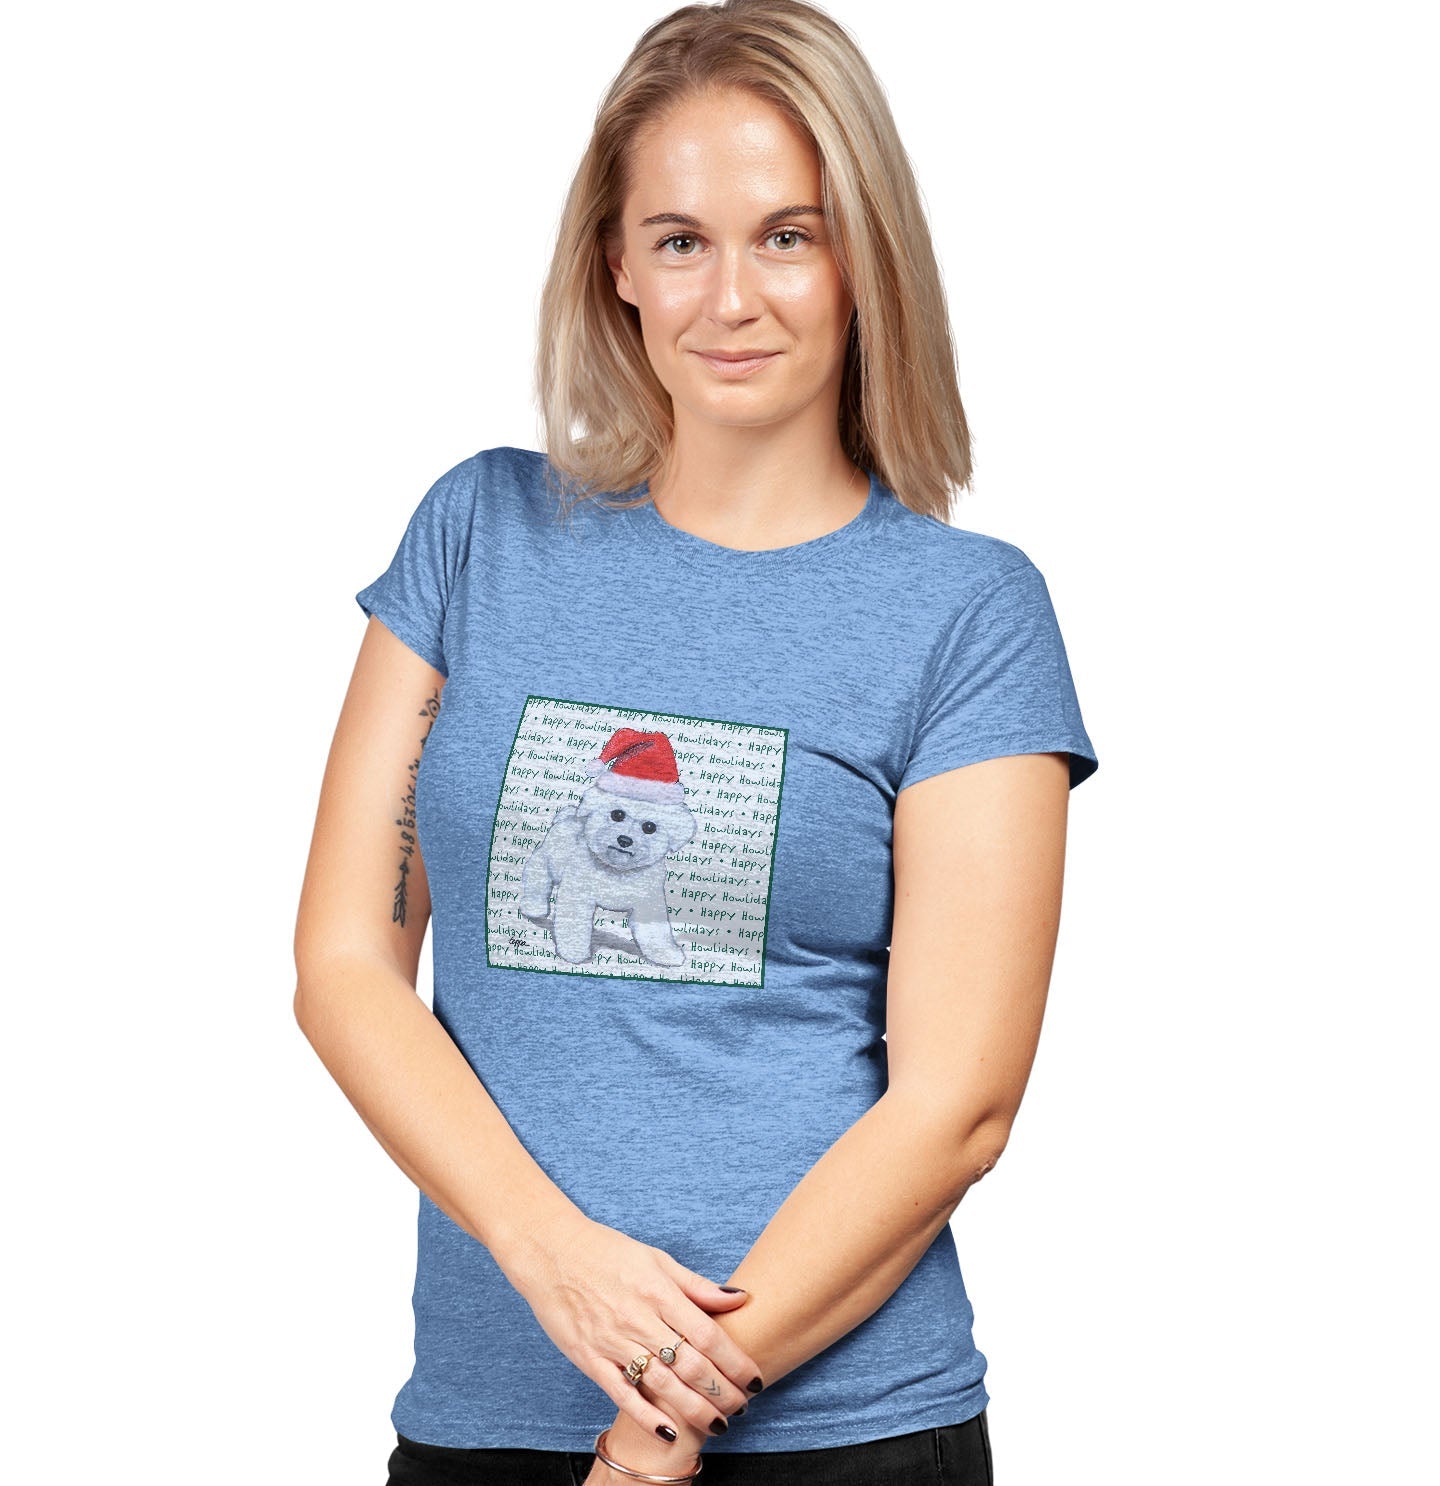 Bichon Frise Puppy Happy Howlidays Text - Women's Tri-Blend T-Shirt